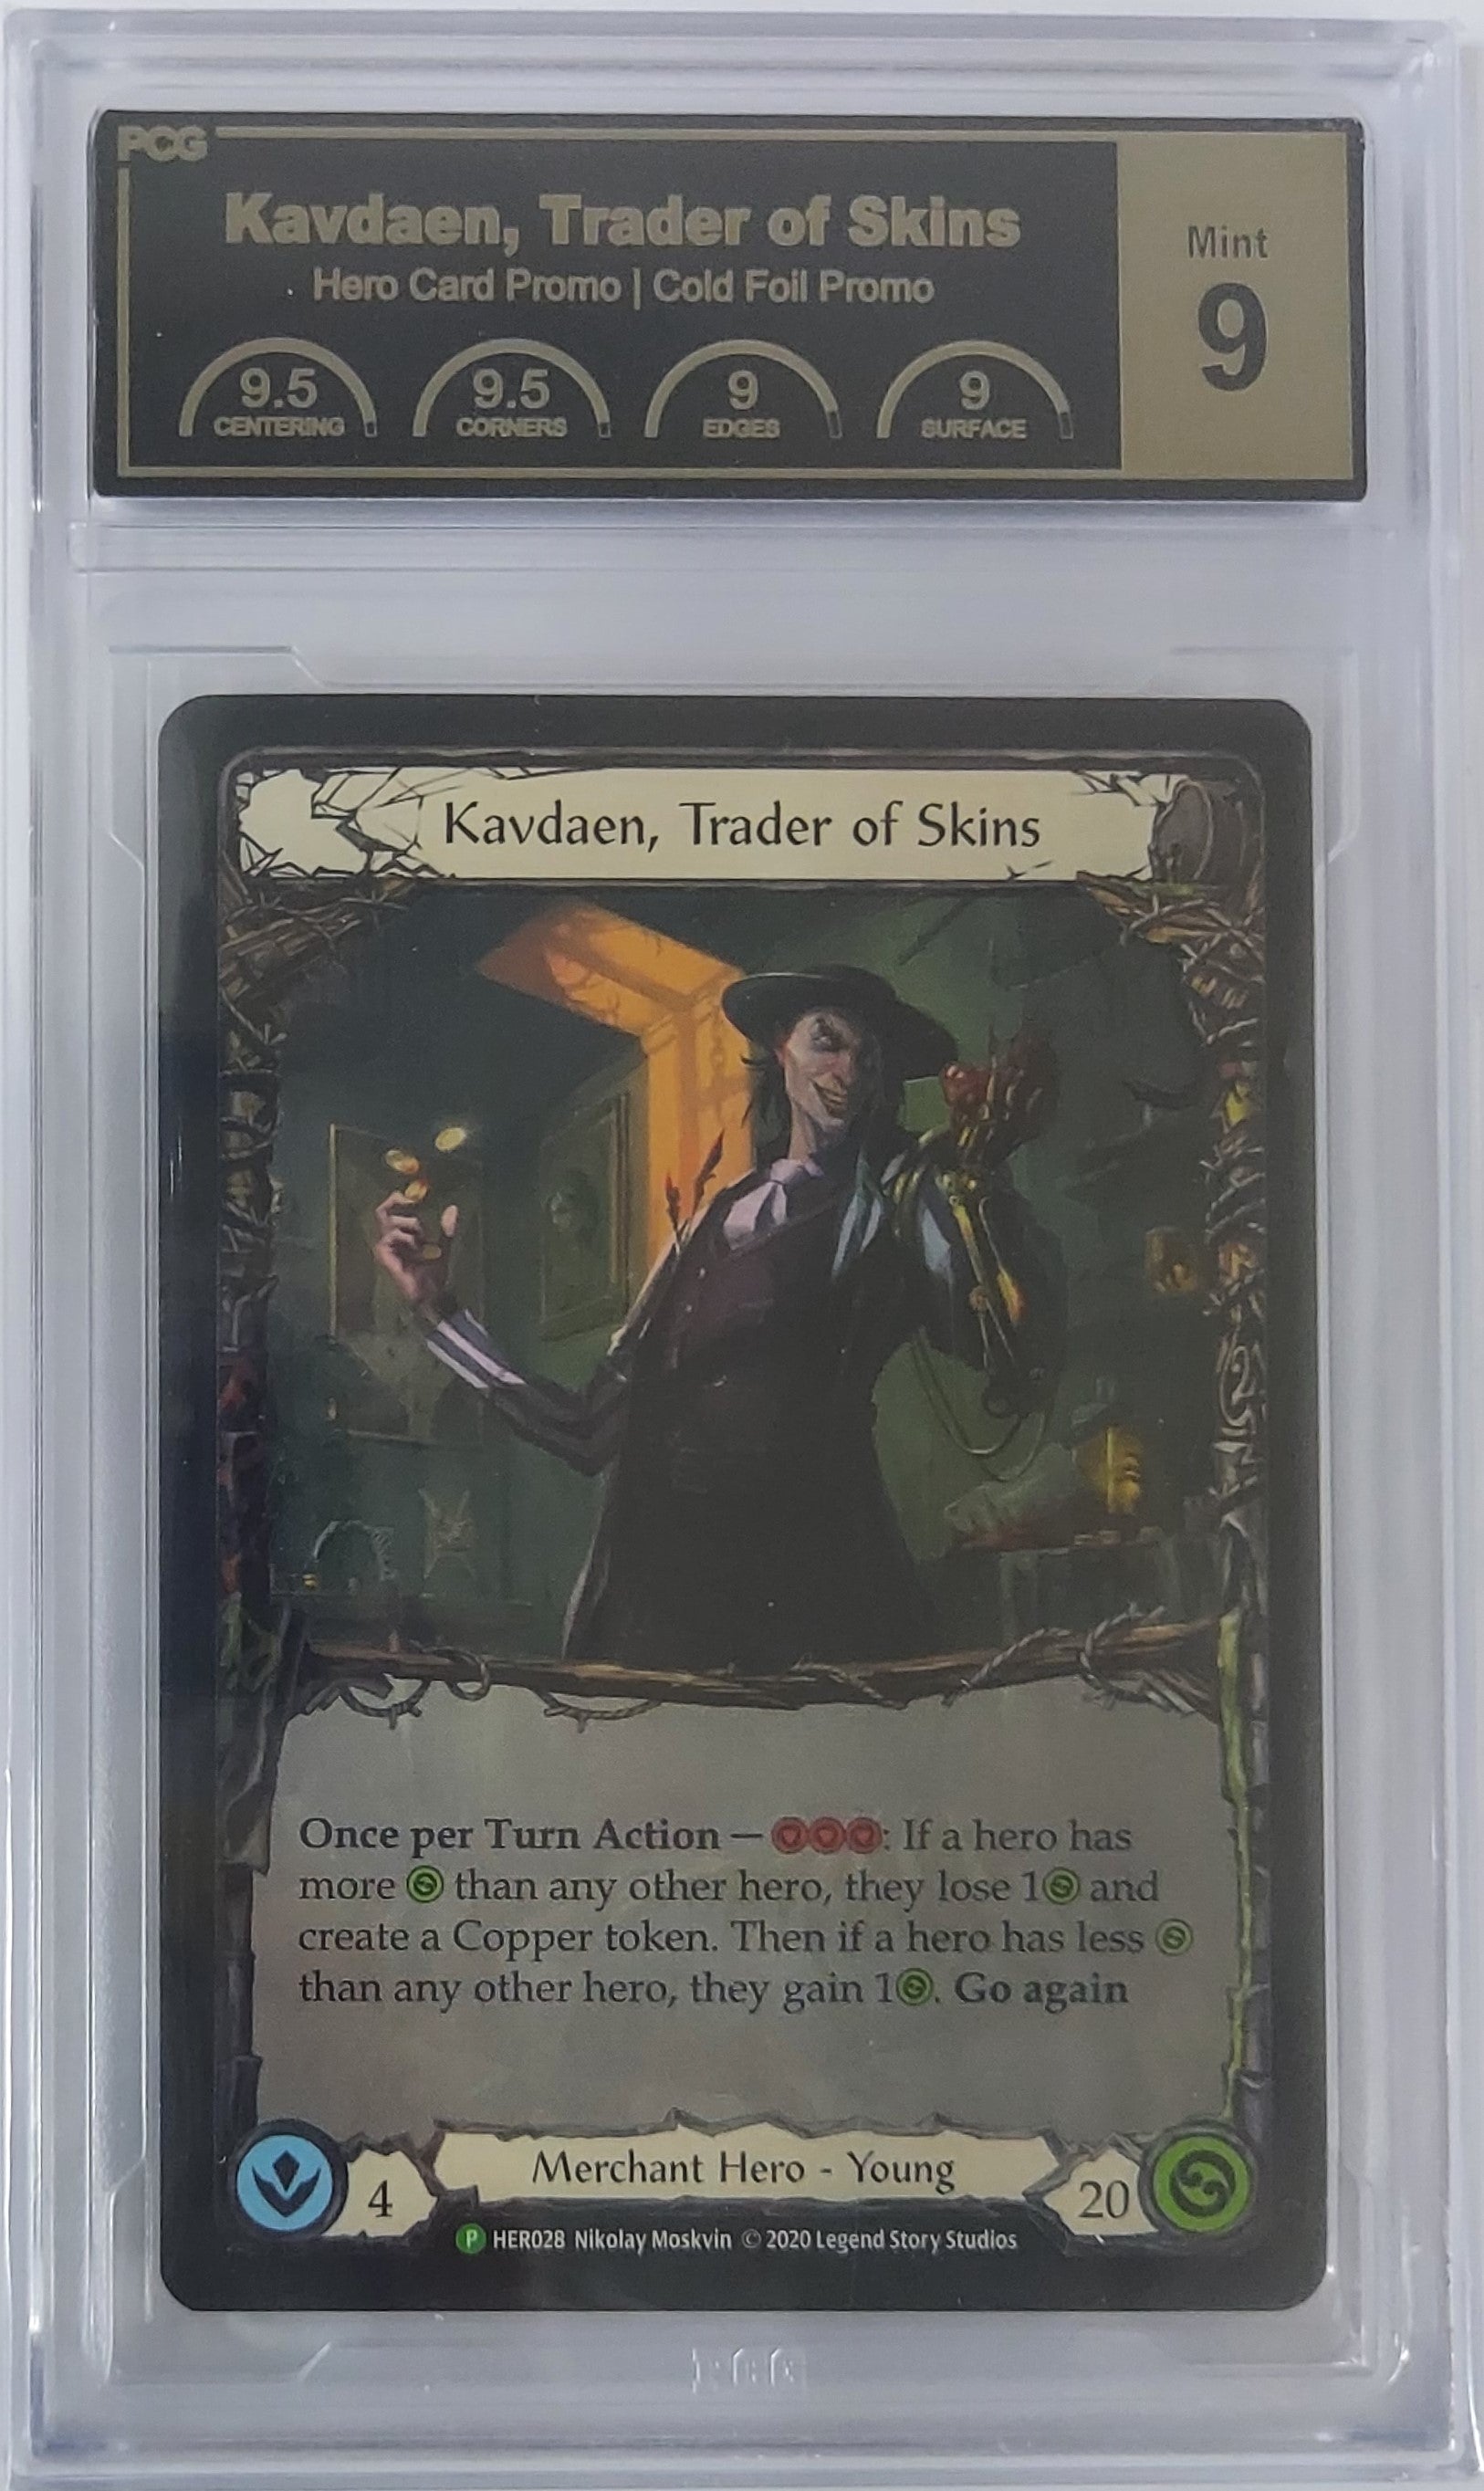 [PCG 9] [Promo] [CF] Kavdaen, Trader of Skins - HER028